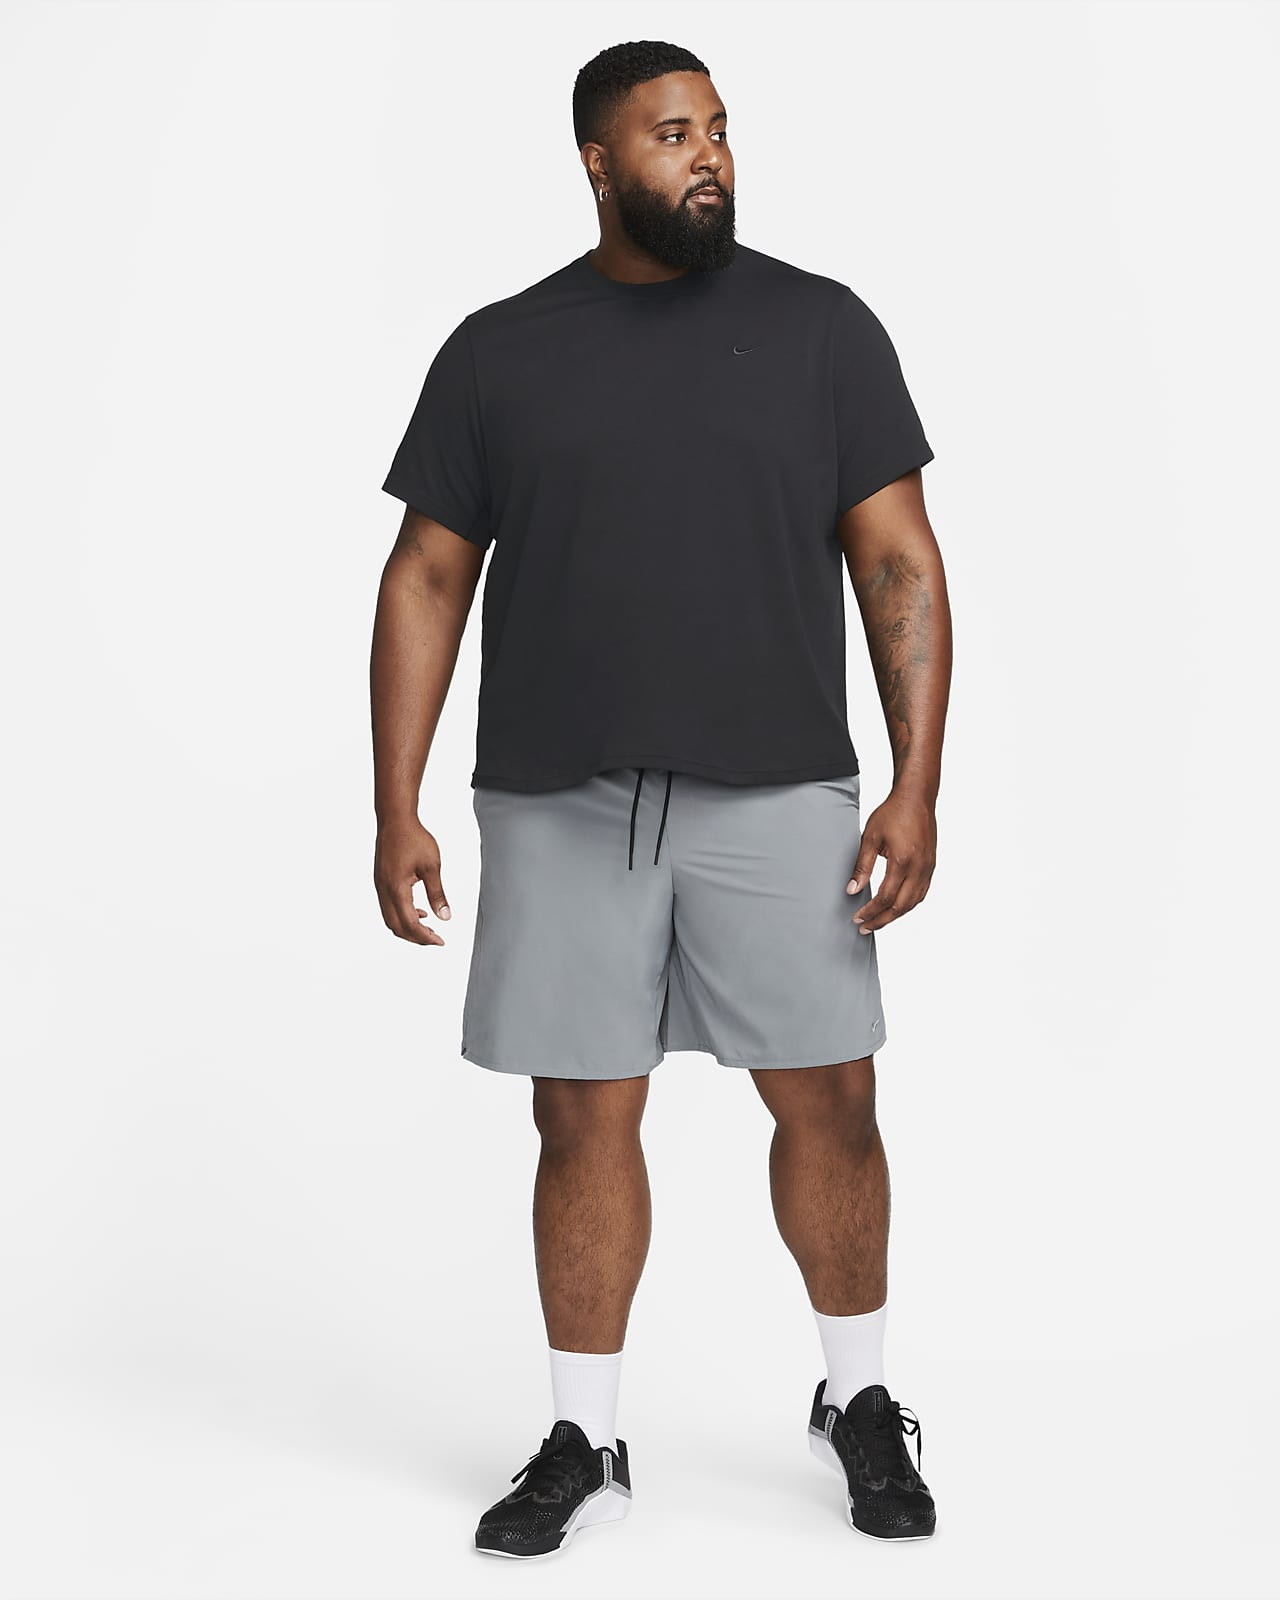 Nike Men's Core Dri-FIT Slim Short Sleeve Top